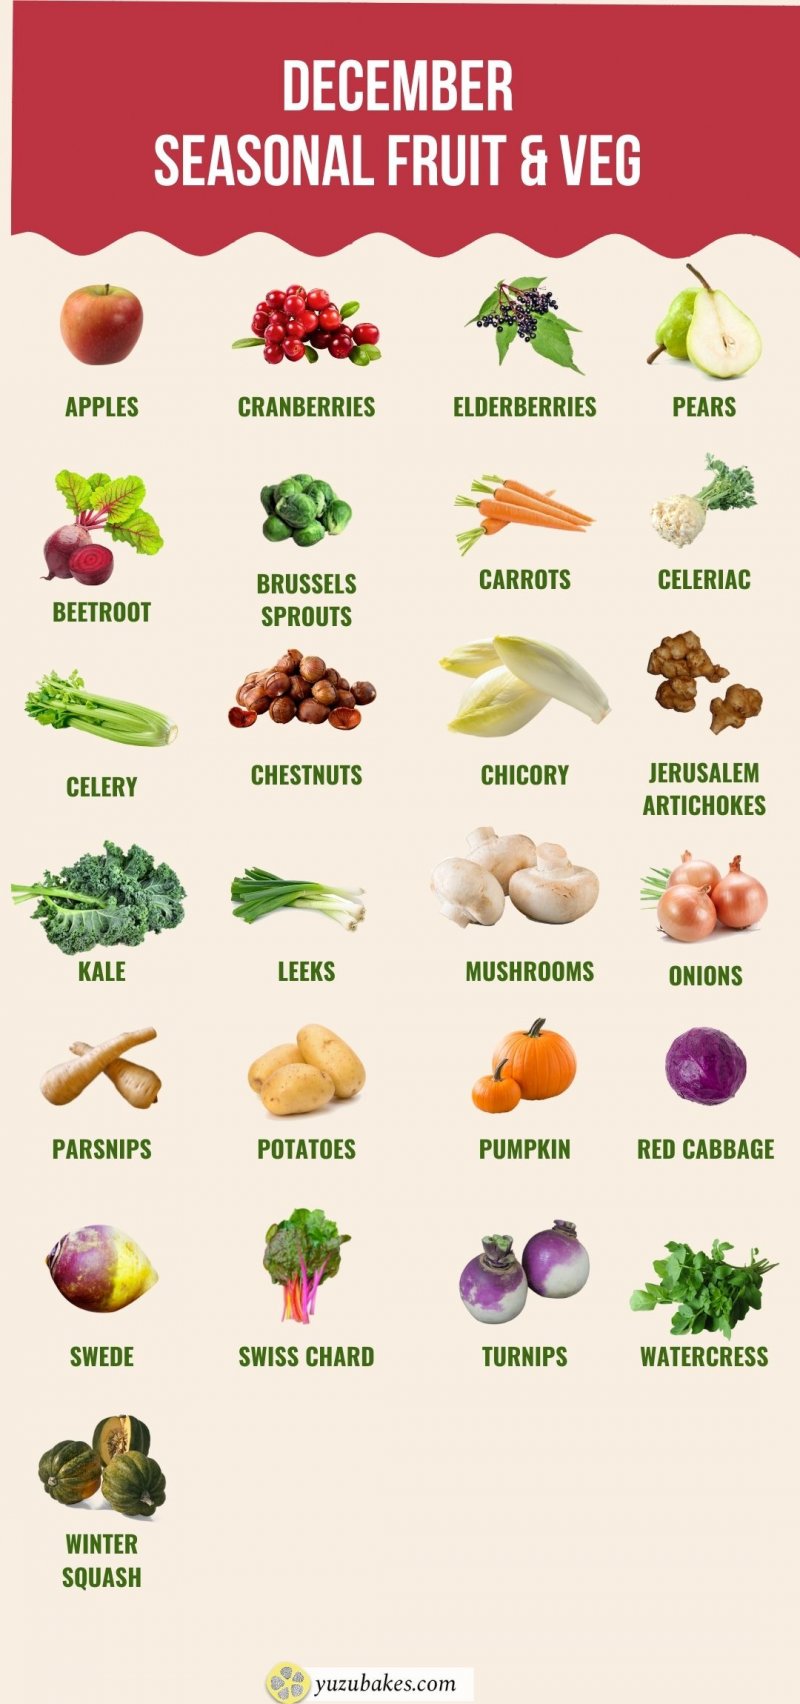 Fruits and Vegetables in Season in December - Seasonal Produce Guide!